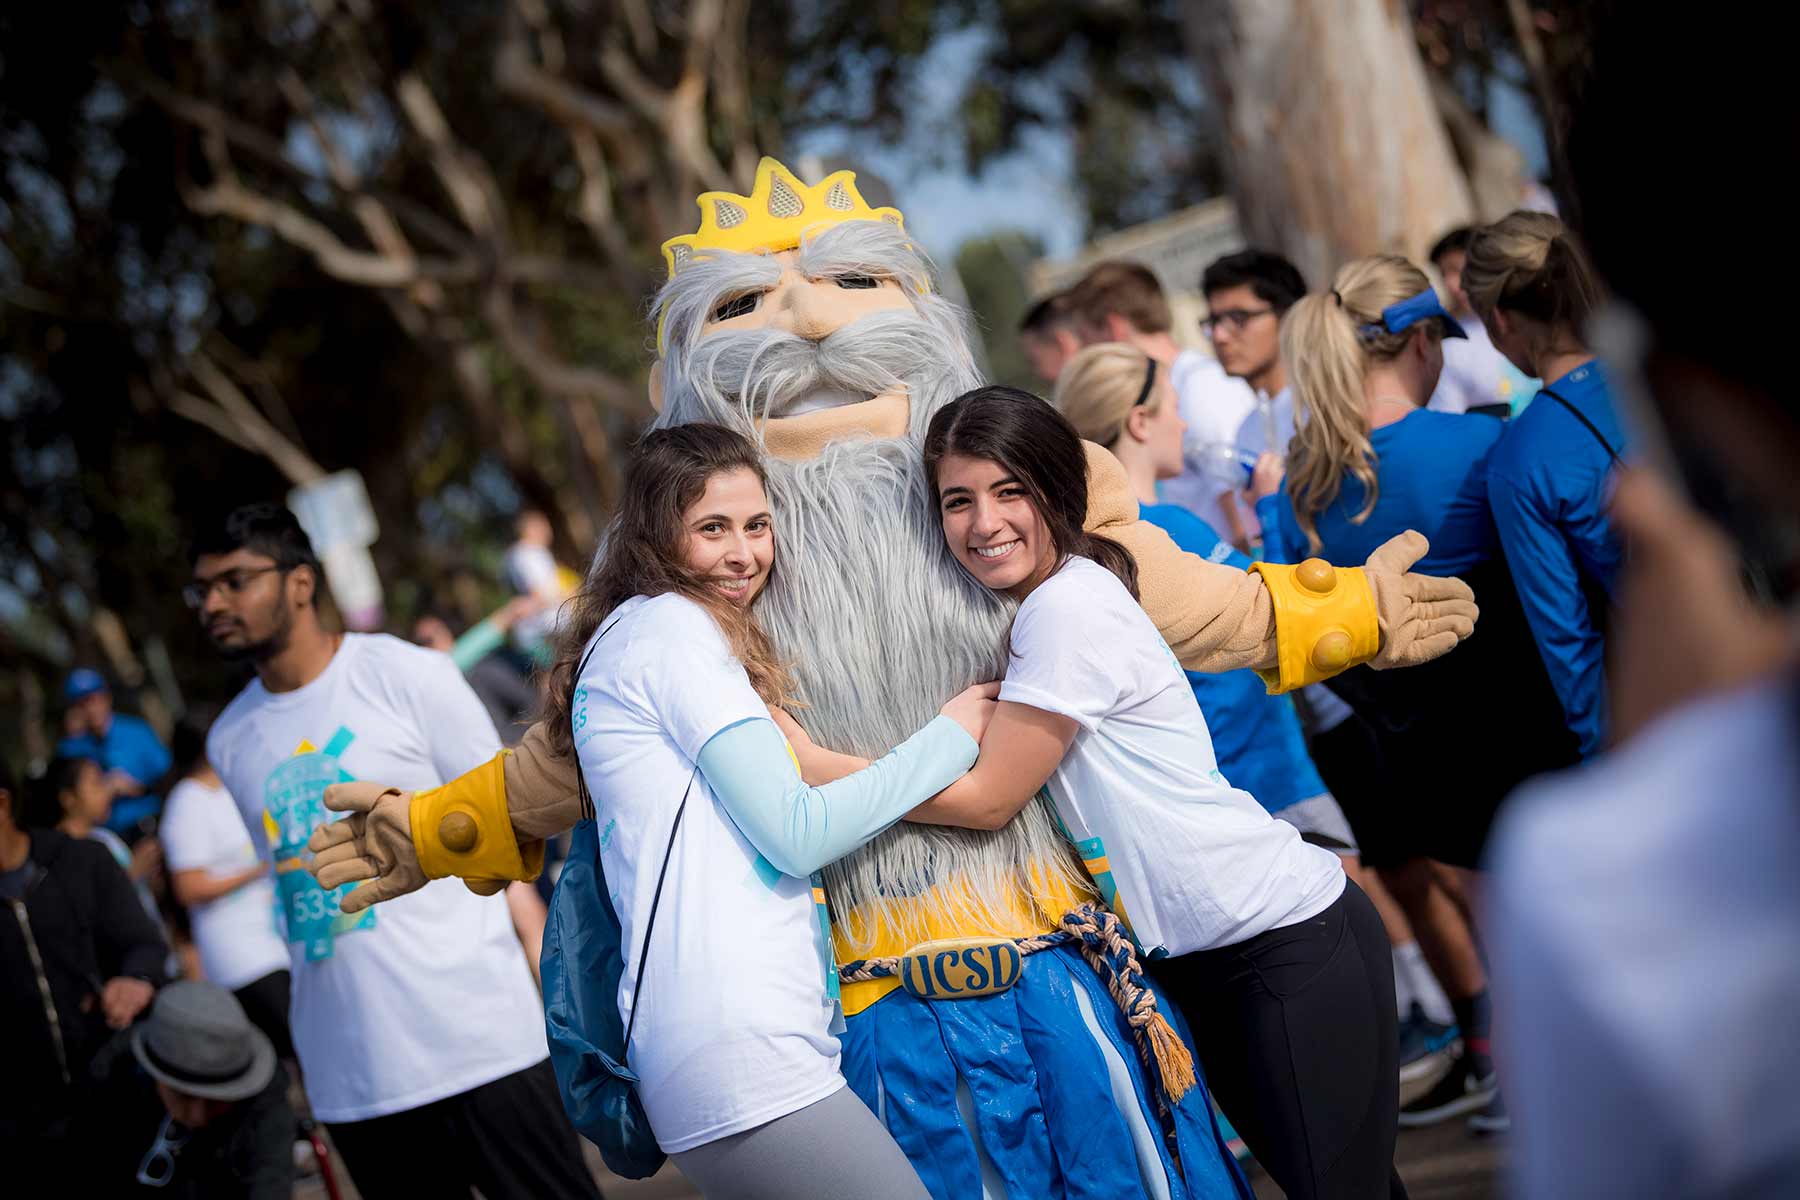 Student hugging King Triton mascot